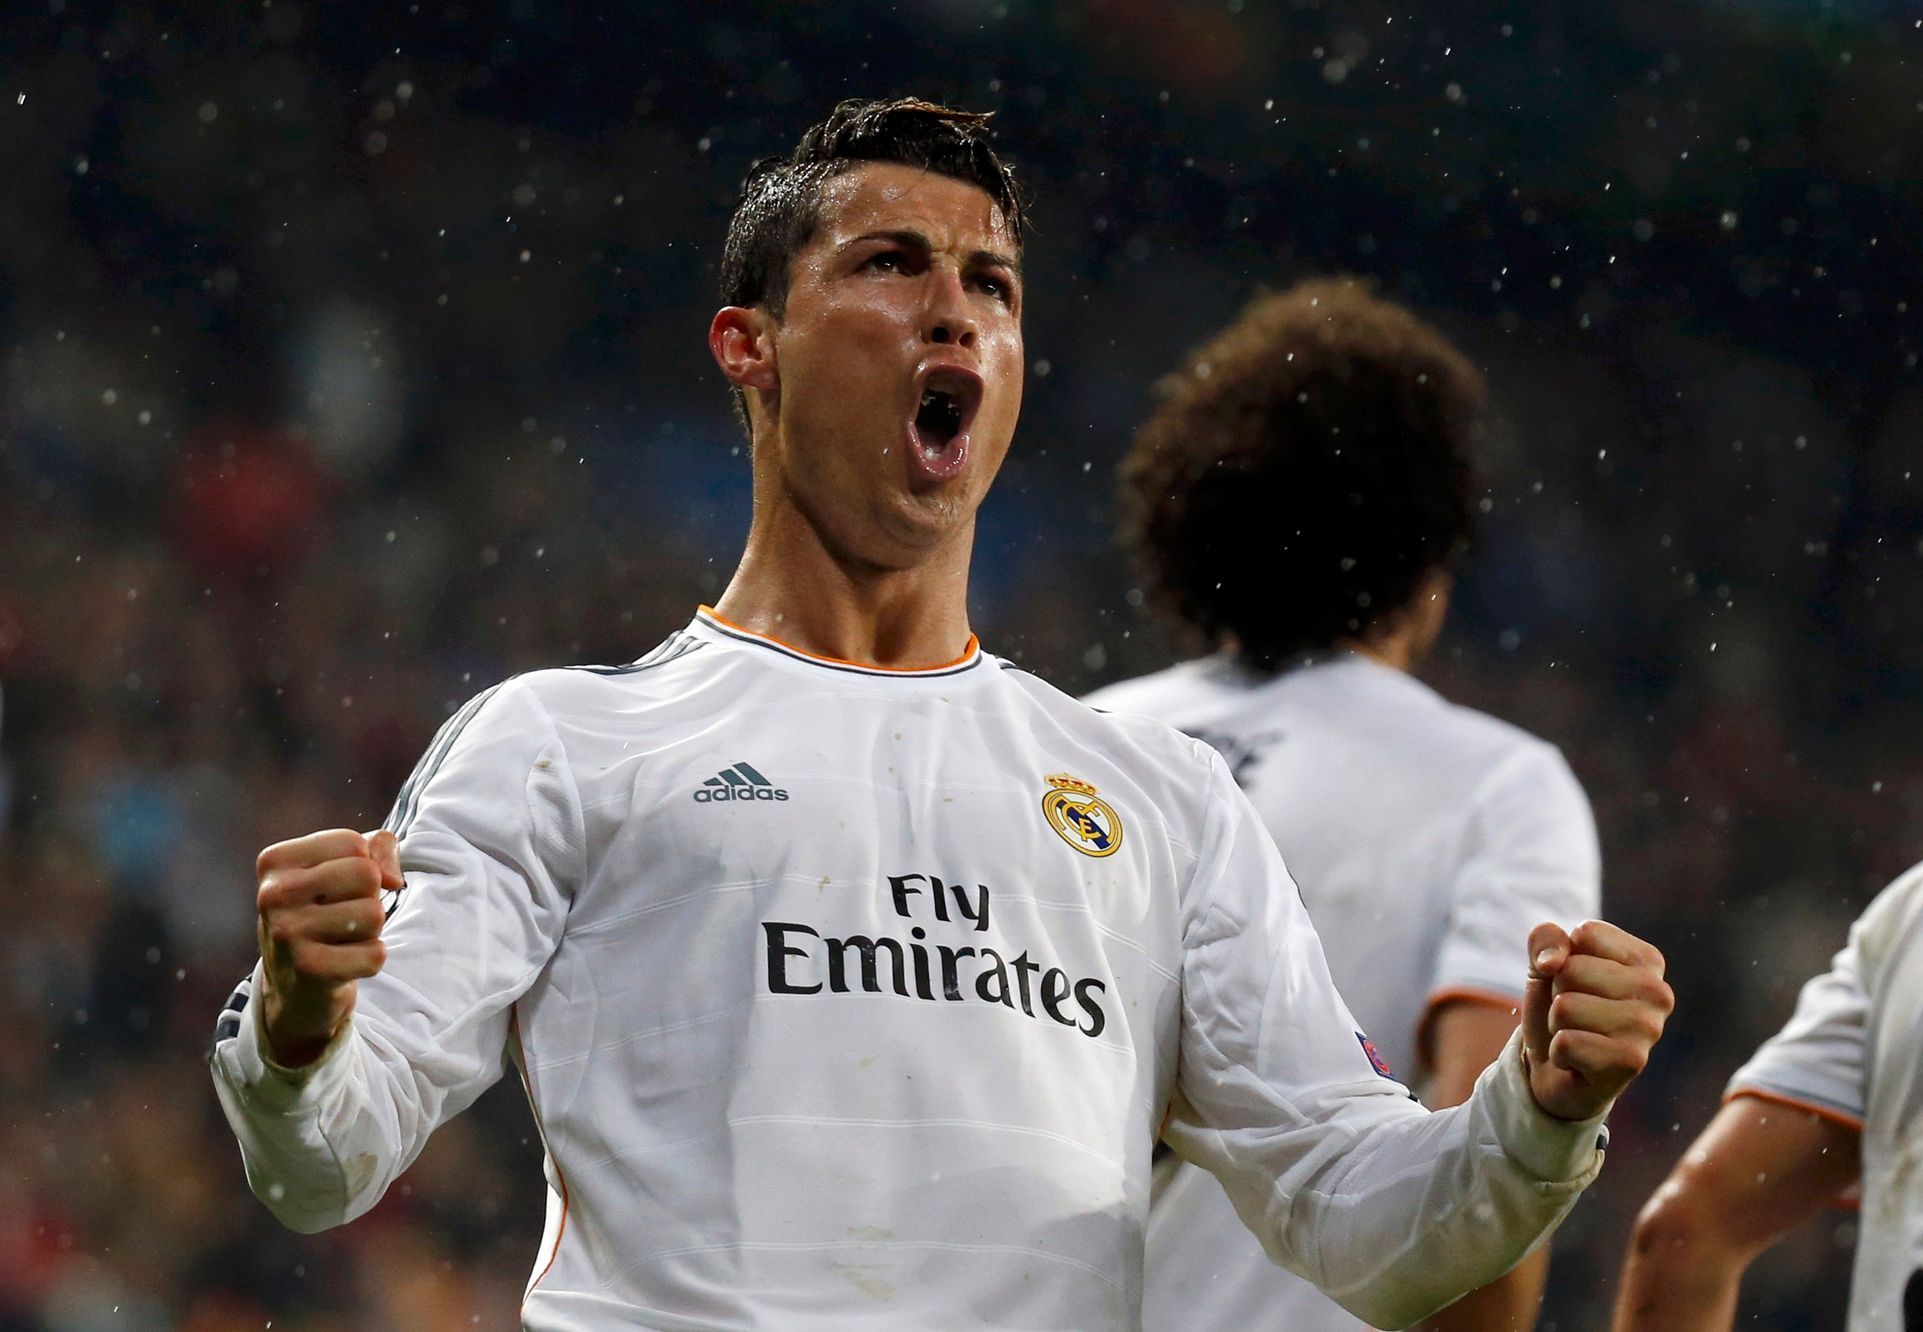 Ronaldo of Real Madrid celebrates his goal against Borussia Dortmund during their Champions League quarter-final first leg soccer match at Santiago Bernabeu stadium in Madrid